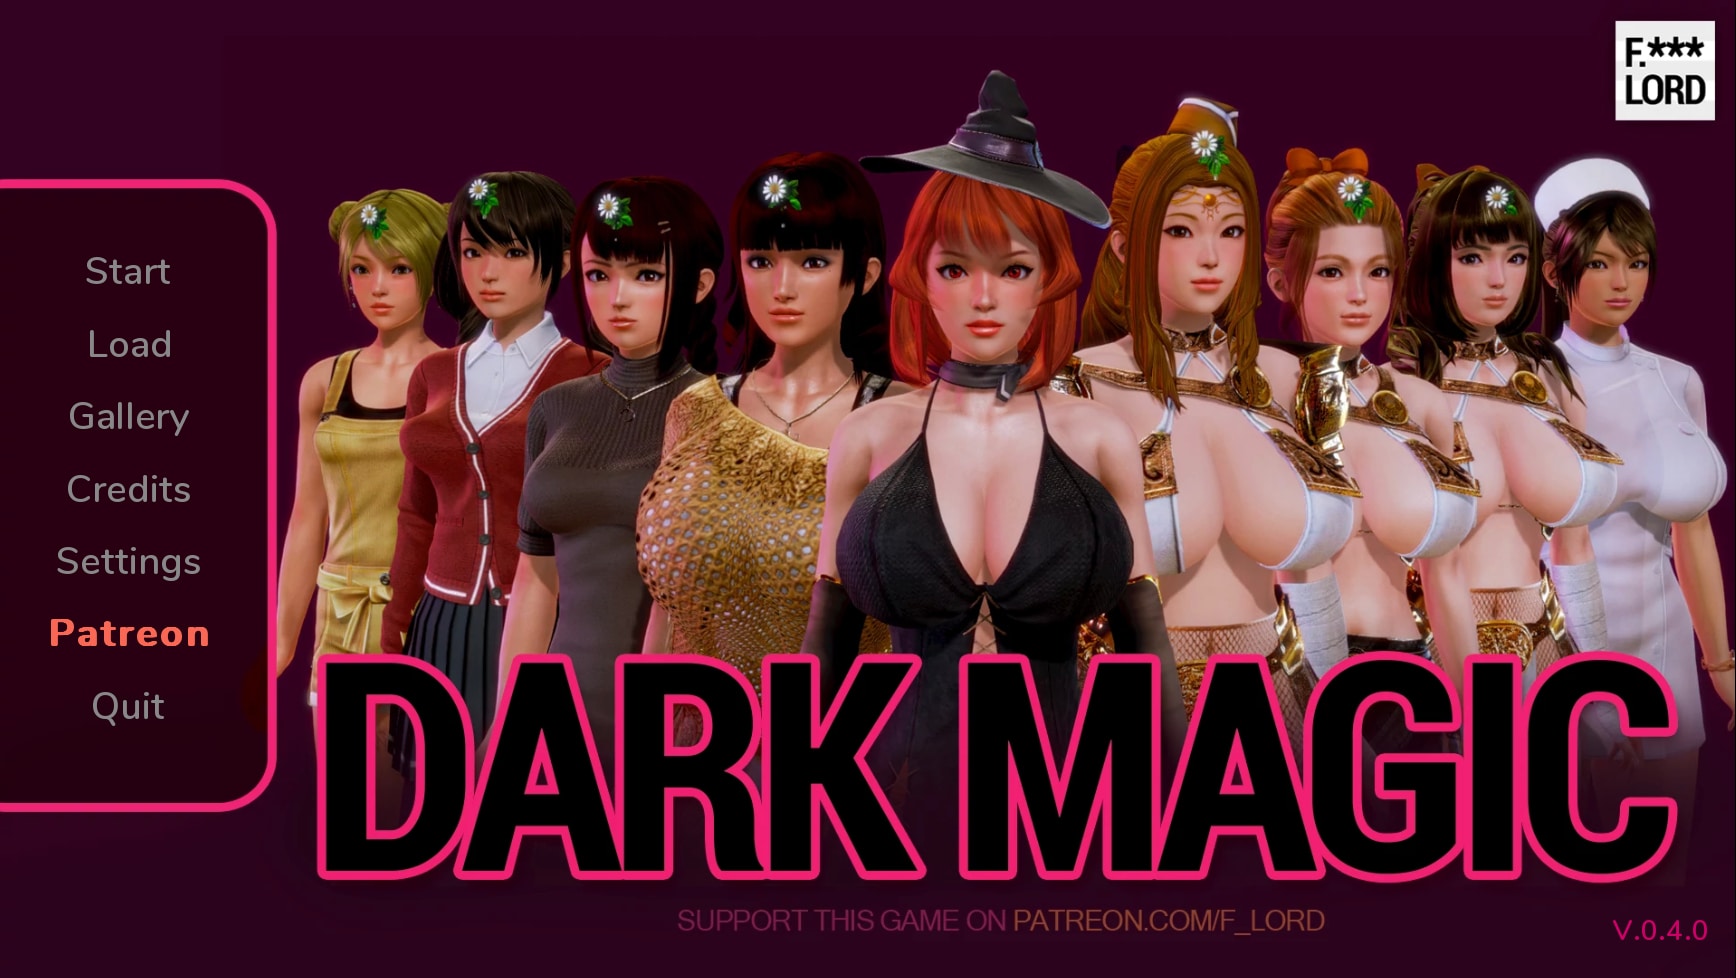 Dark magic porn game